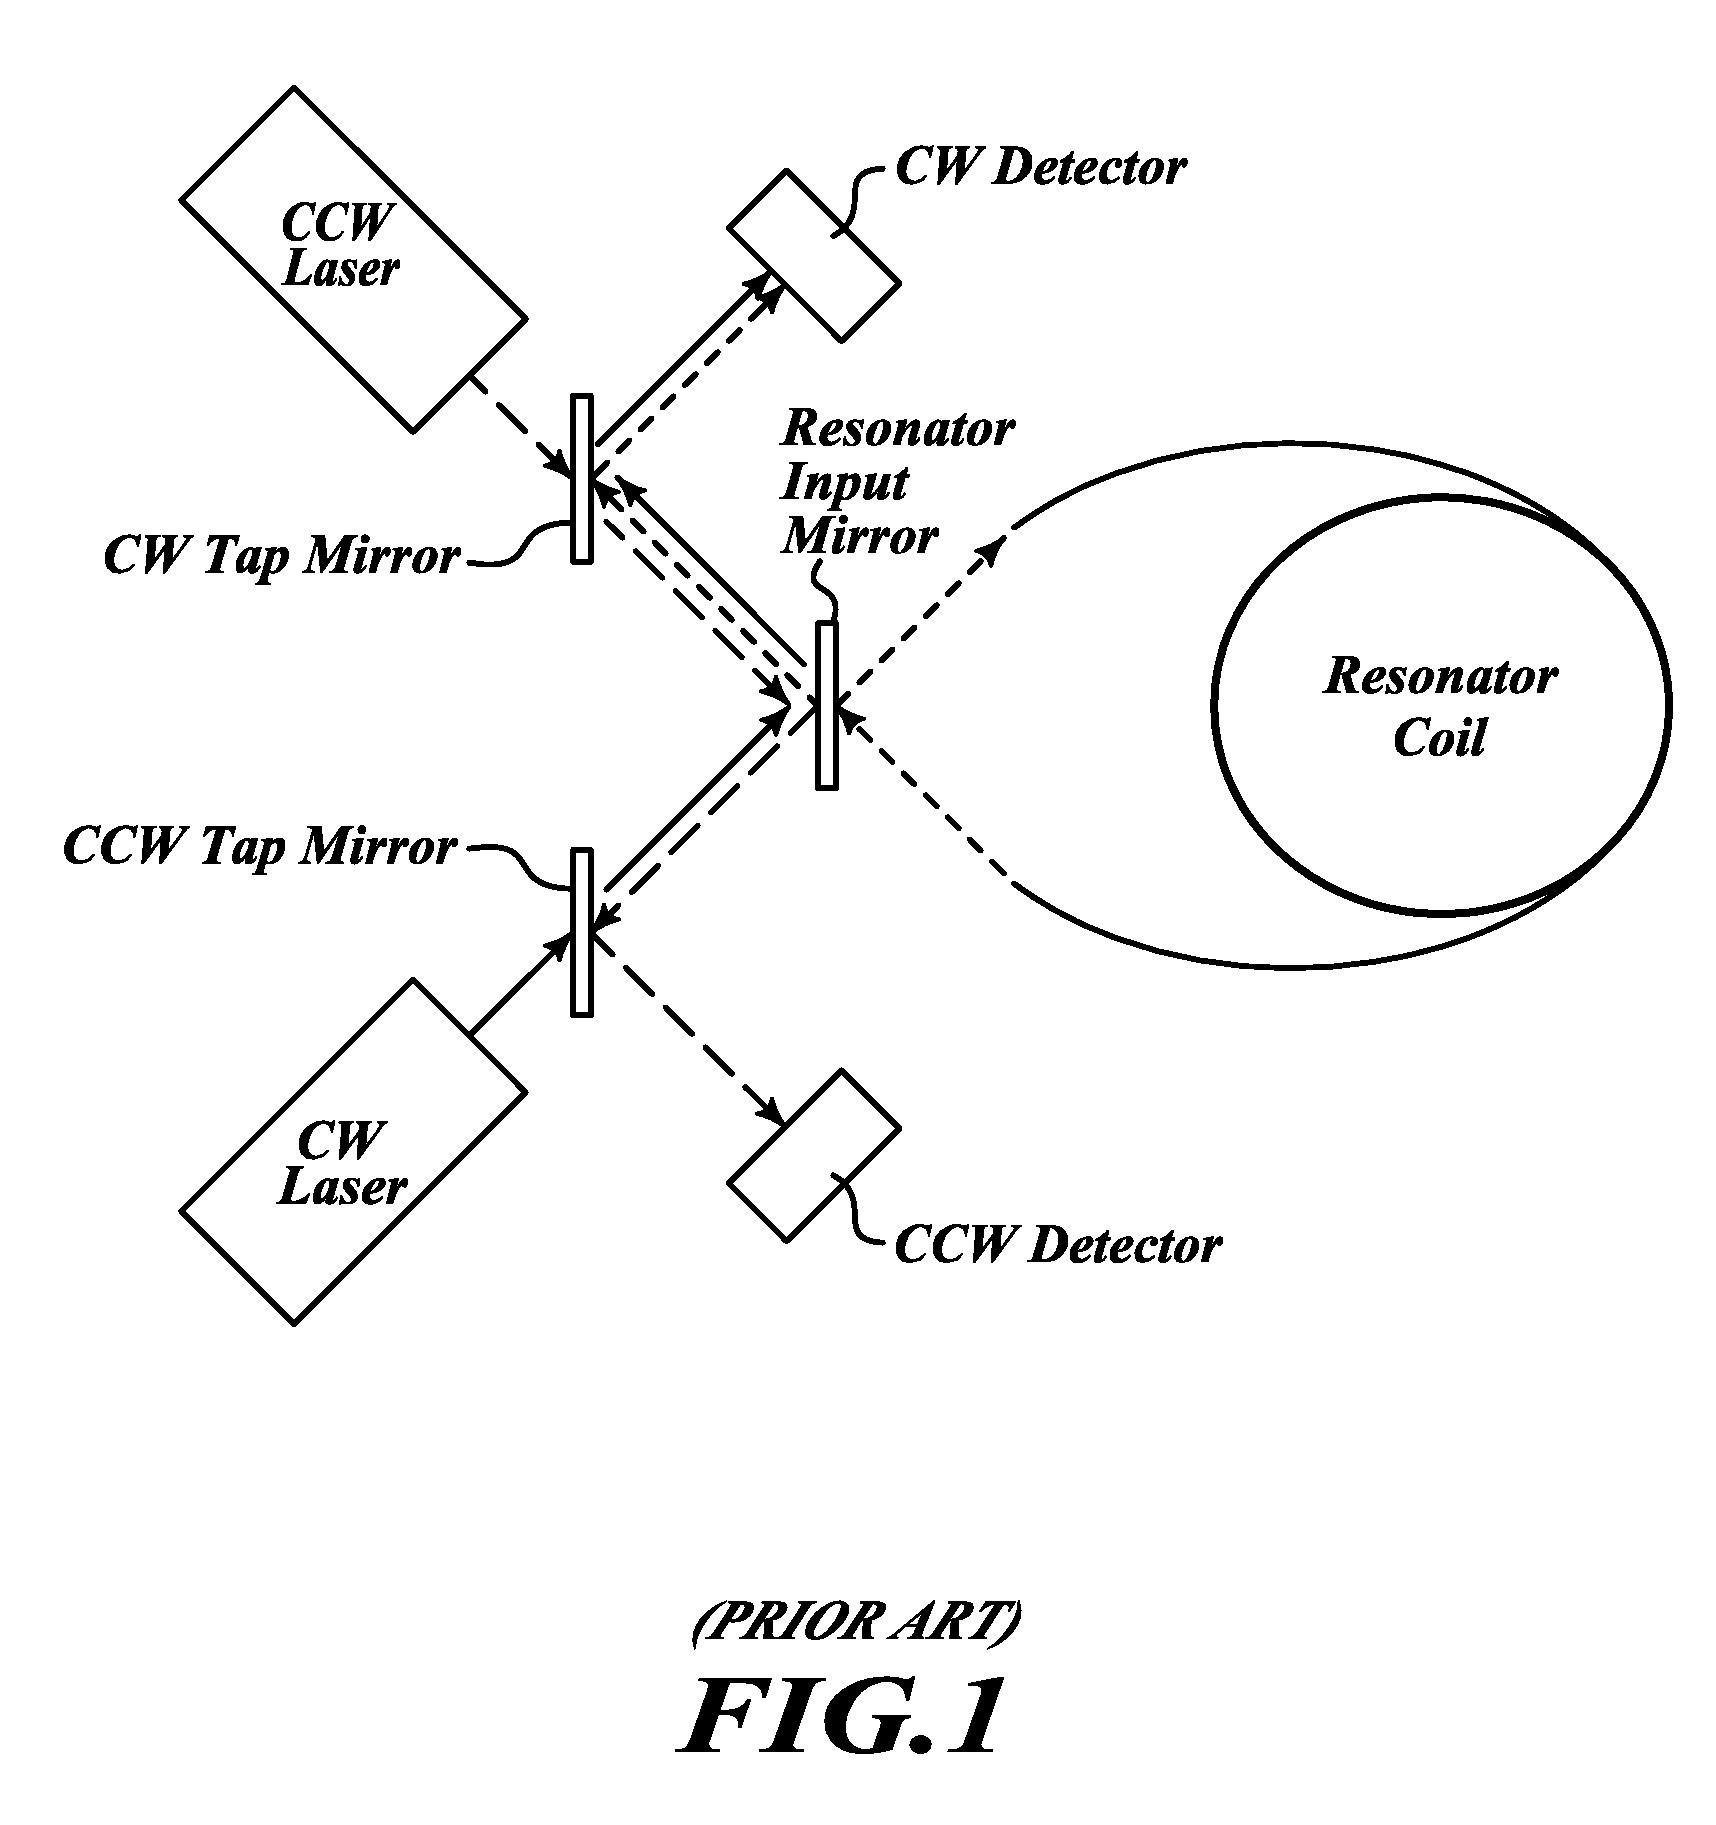 Compact resonator fiber optic gyroscopes